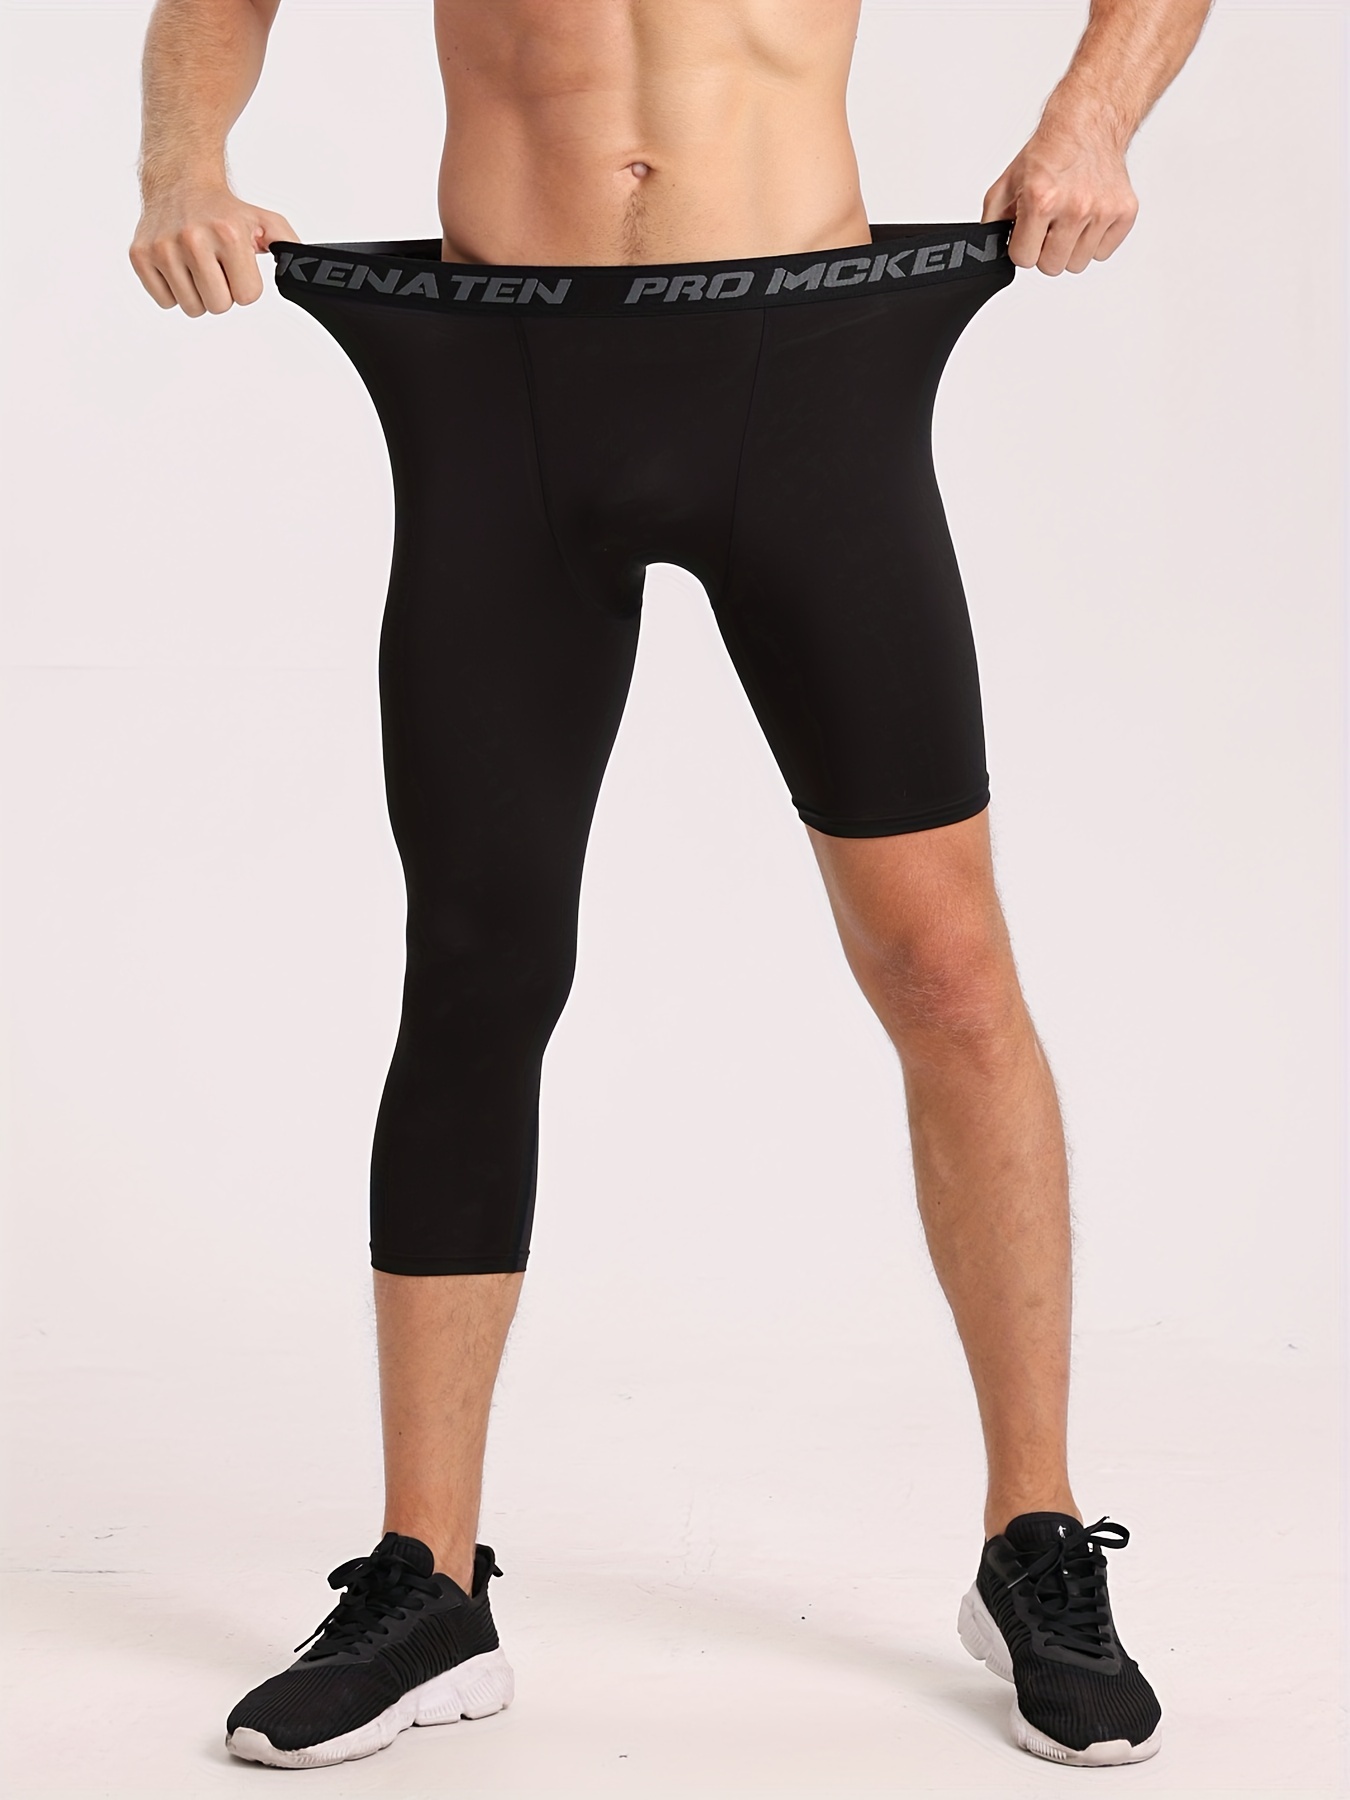  Men's One Leg Compression Capri Tights Pants Athletic